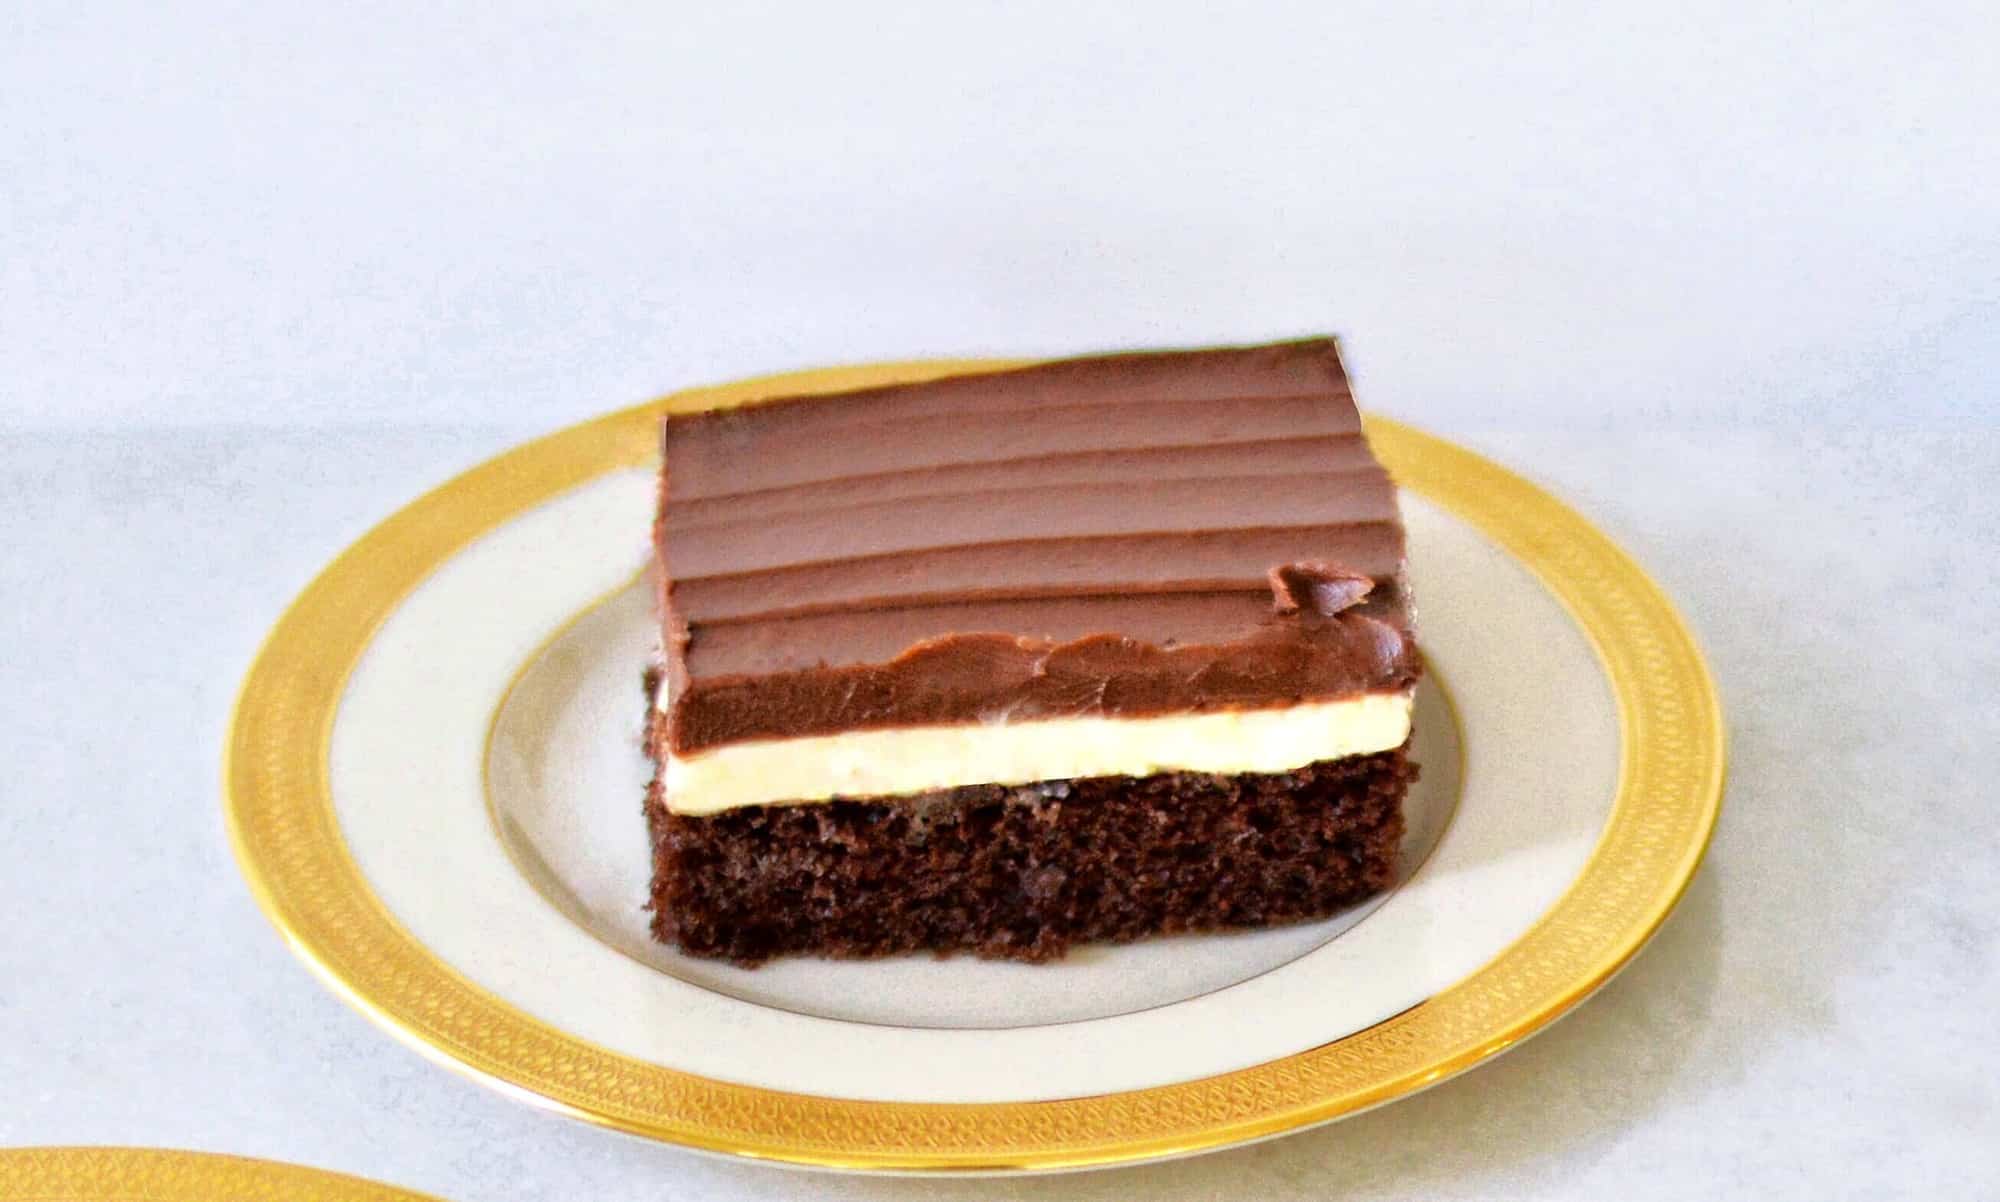 slice of Ho Ho cake: chocolate cake with layer of cream and ganache